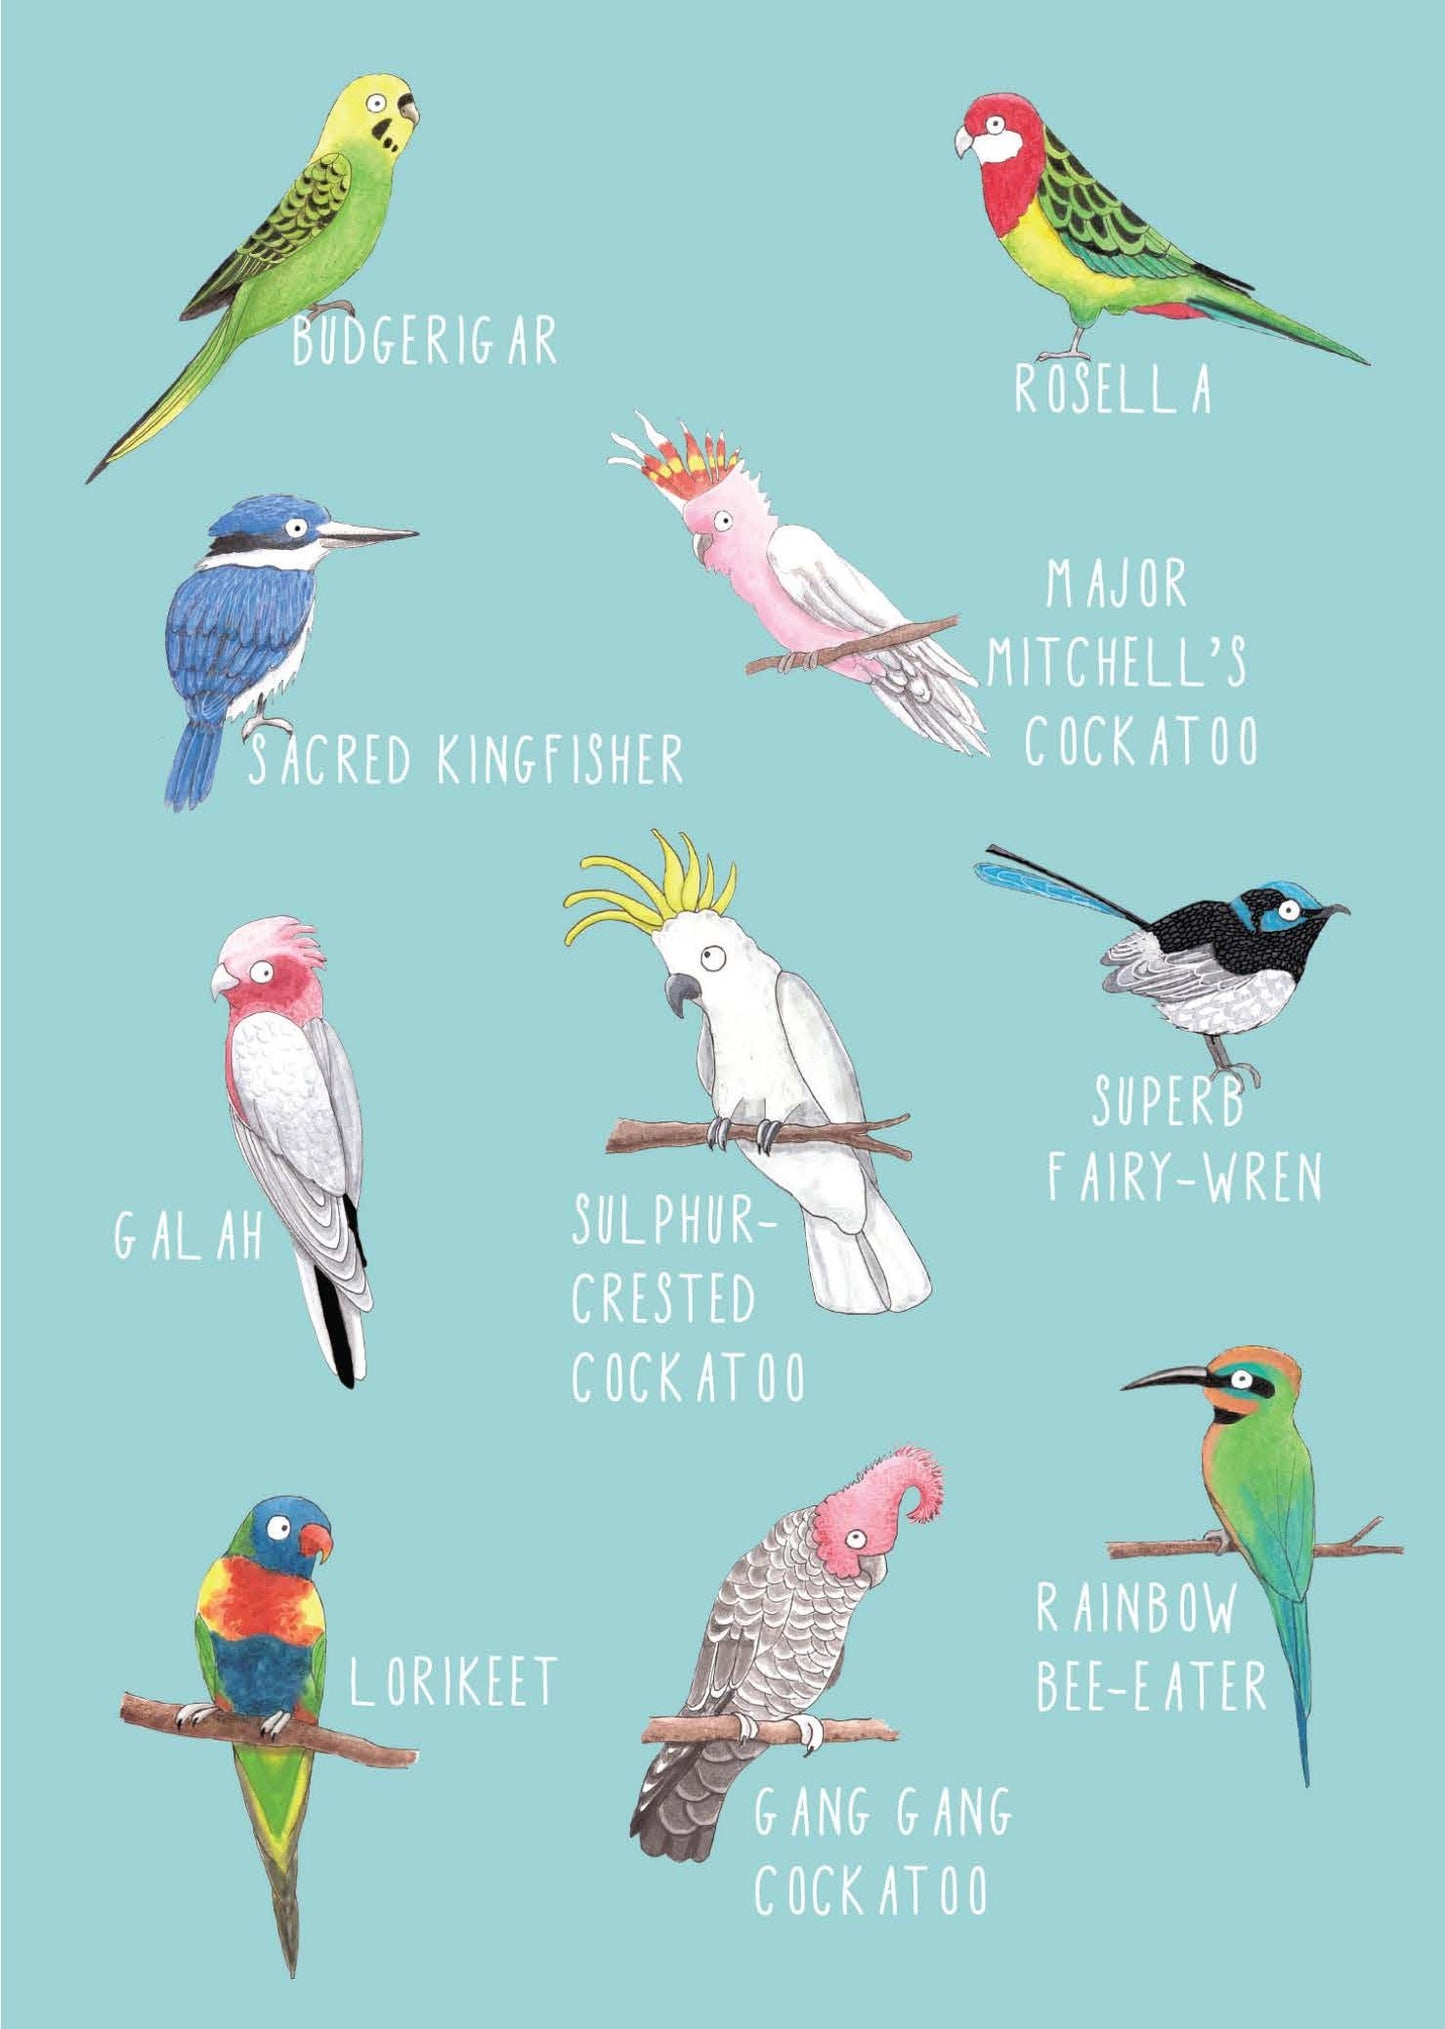 NUOVO - TANIA McCARTNEY "AUSTRALIAN BIRDS" GREETING CARD